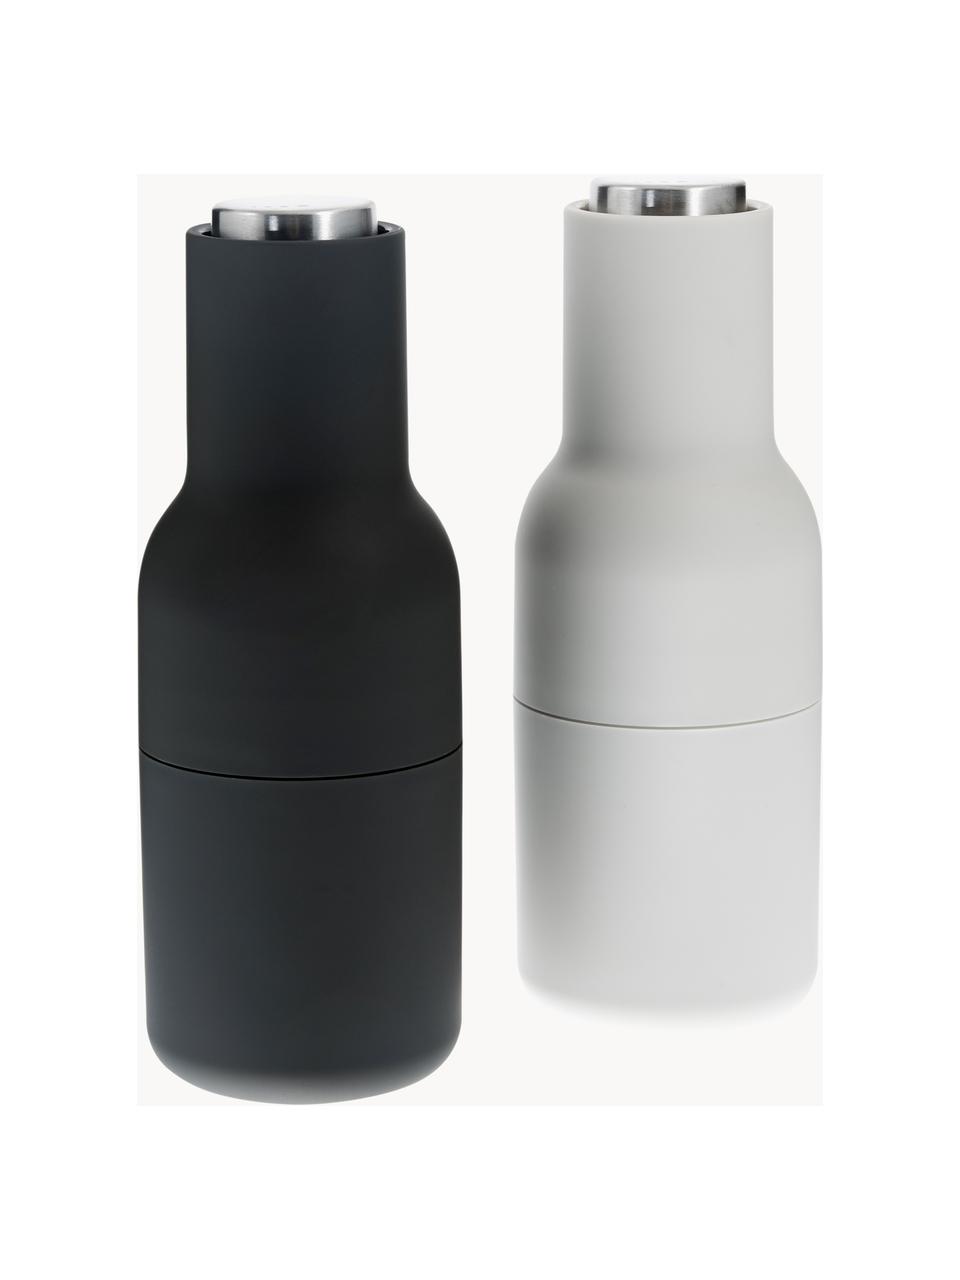 Set macina sale e pepe di design con coperchio in acciaio inossidabile Bottle Grinder 2 pz, Coperchio: acciaio inossidabile, Antracite, bianco, argentato, Ø 8 x Alt. 21 cm